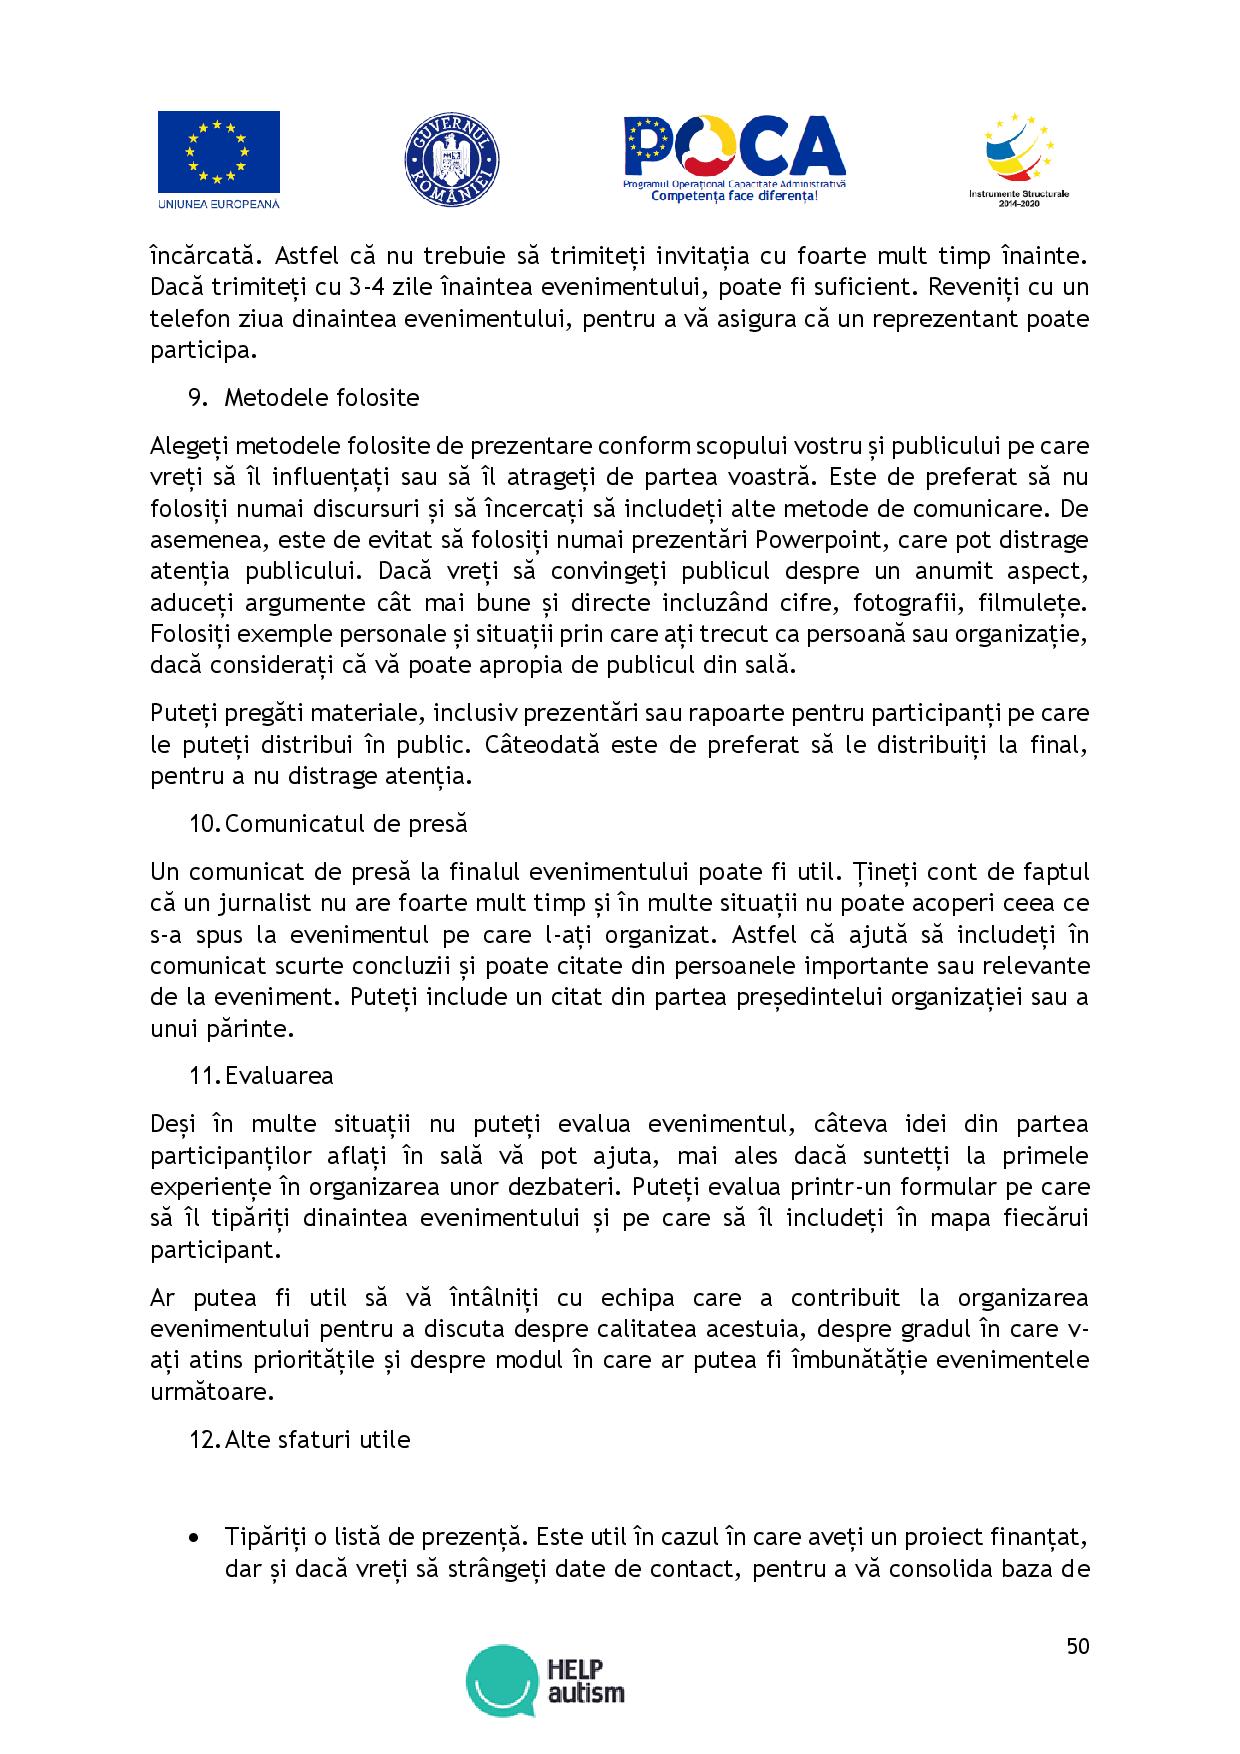 Manual-aug 2019 - incepatori-page-050.jpg